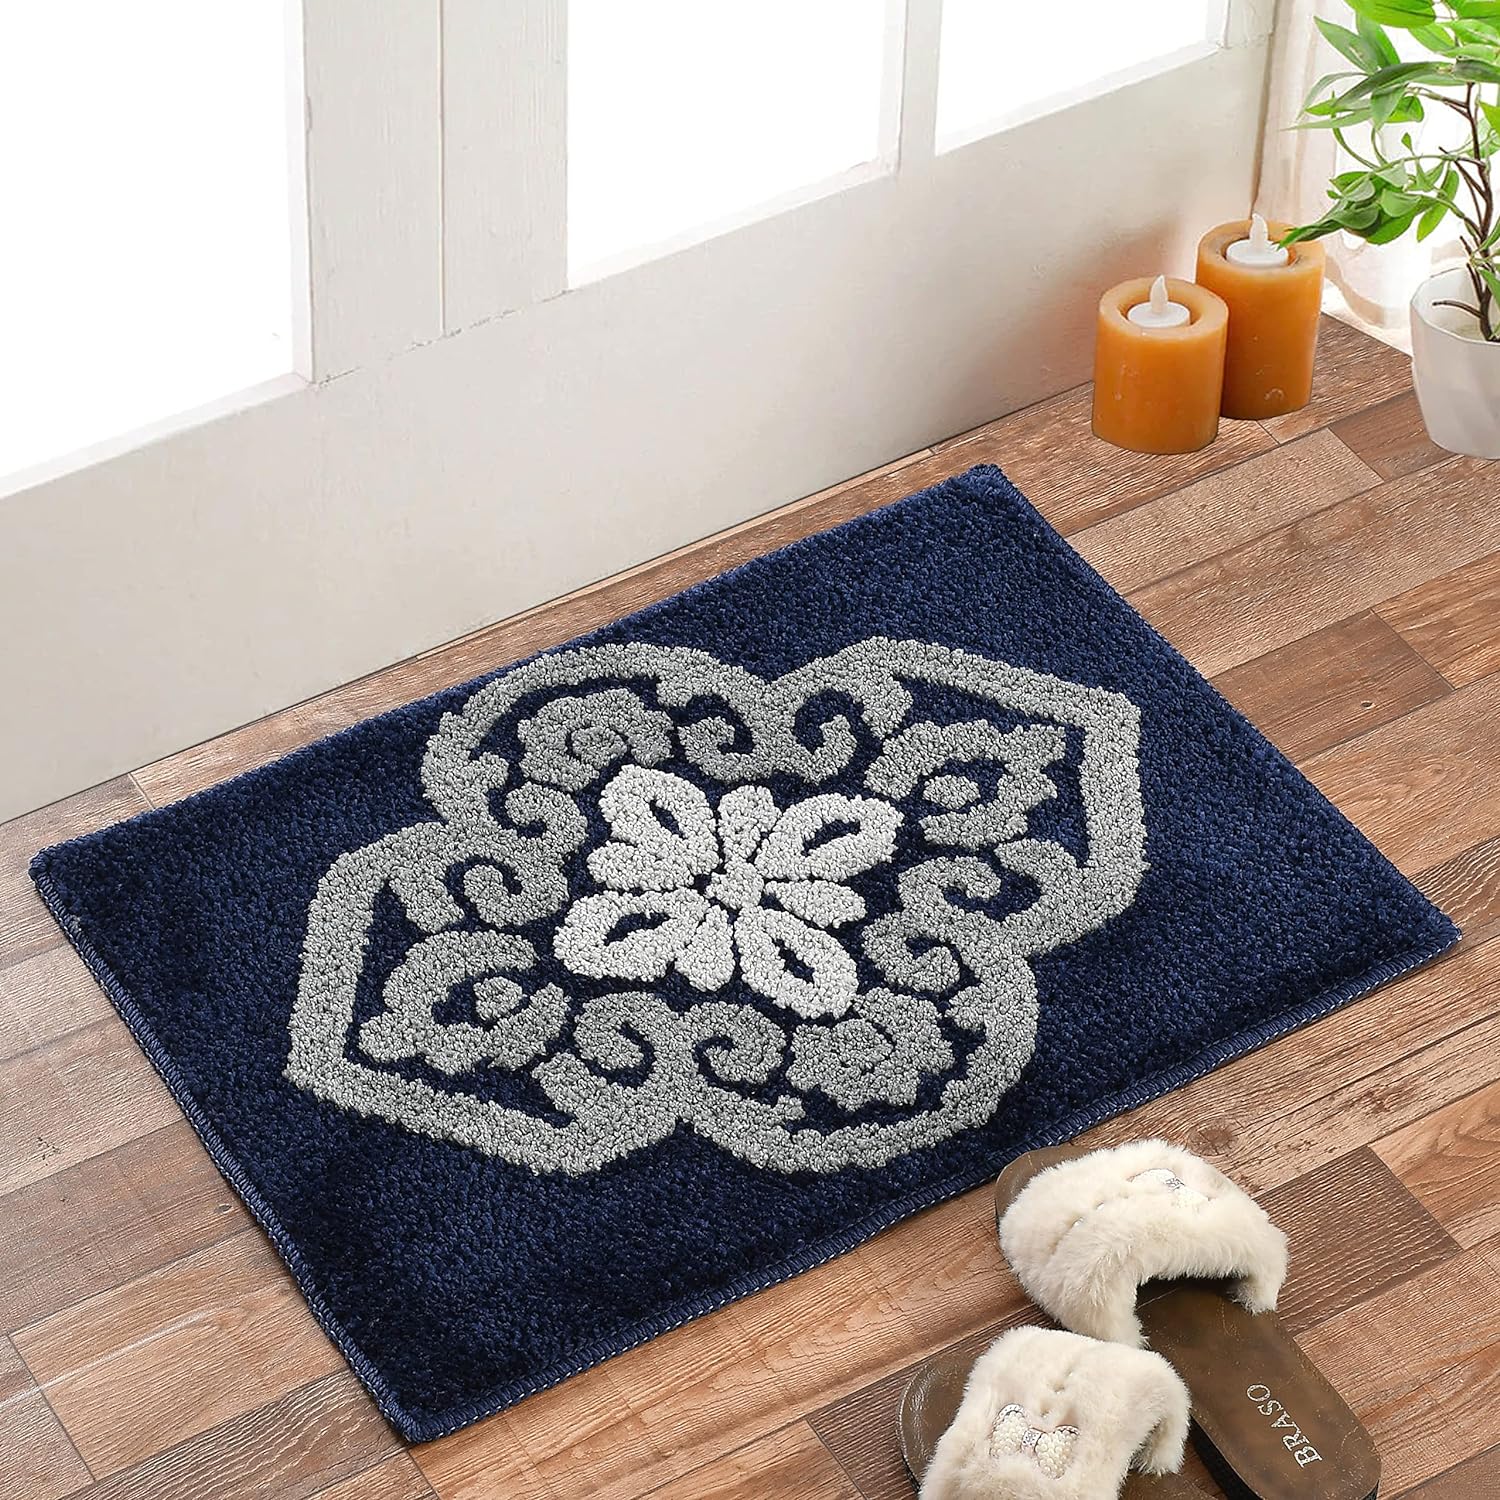 Softy Anti Skid Microfiber Bathroom mat/Doormat 40x60 cm